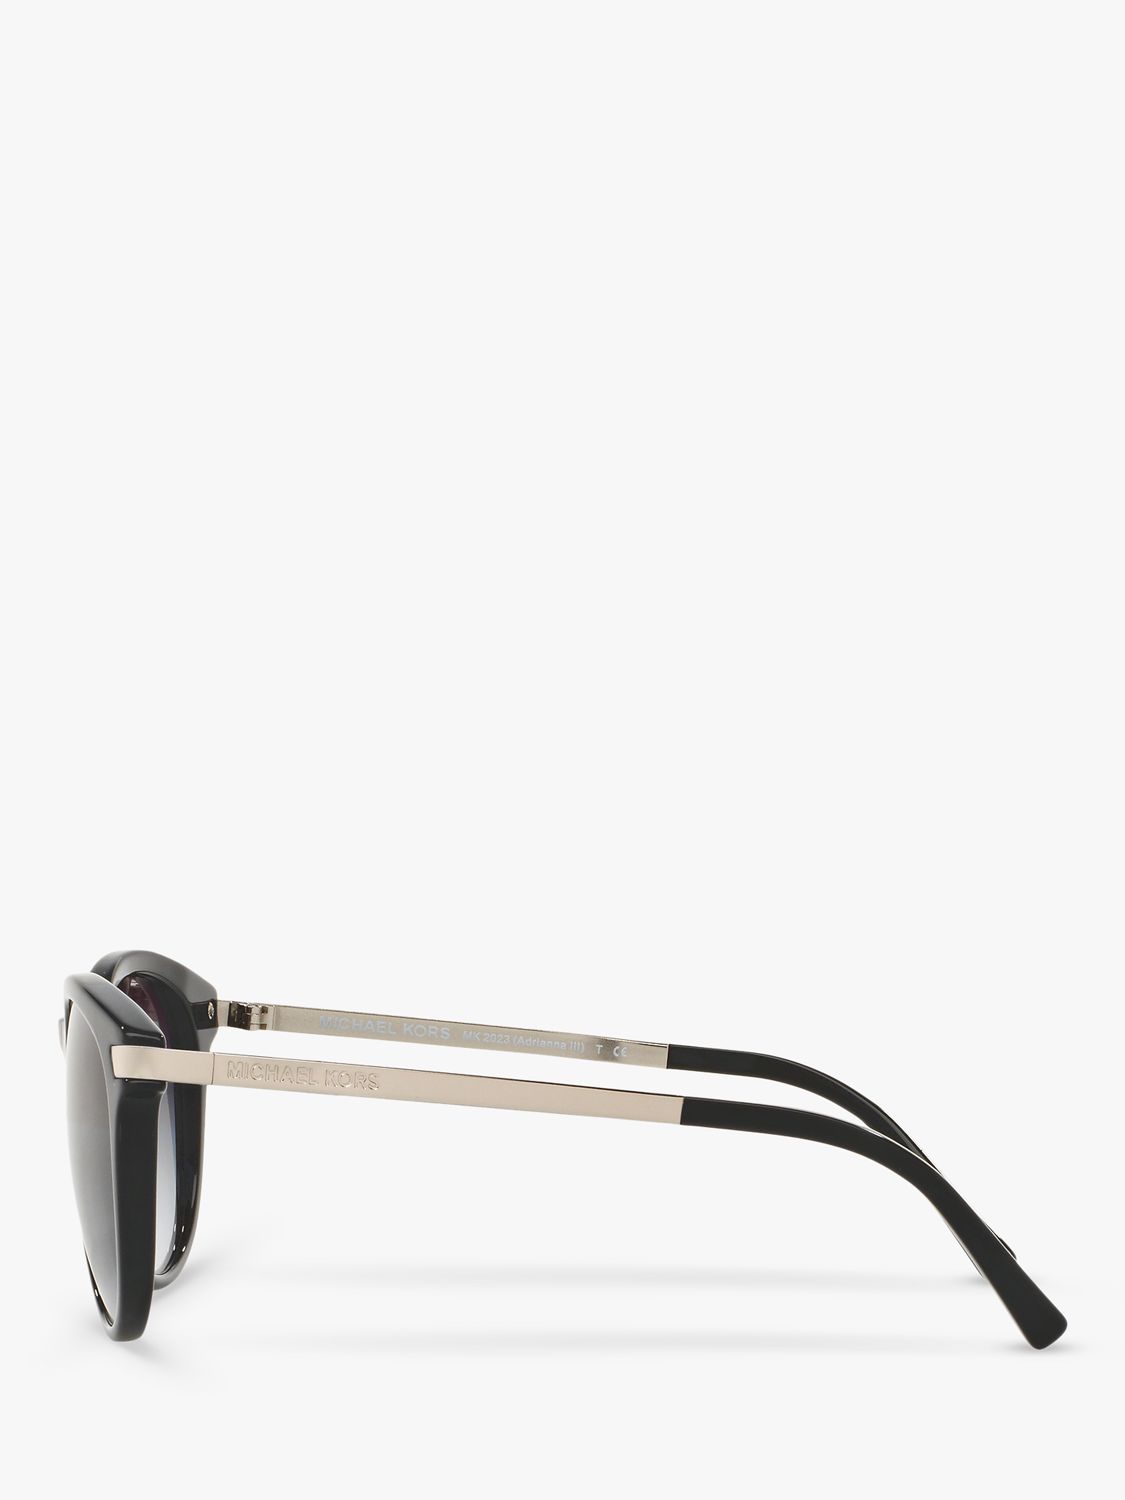 Buy Michael Kors MK2023 Women's Round Sunglasses, Black/Grey Gradient Online at johnlewis.com